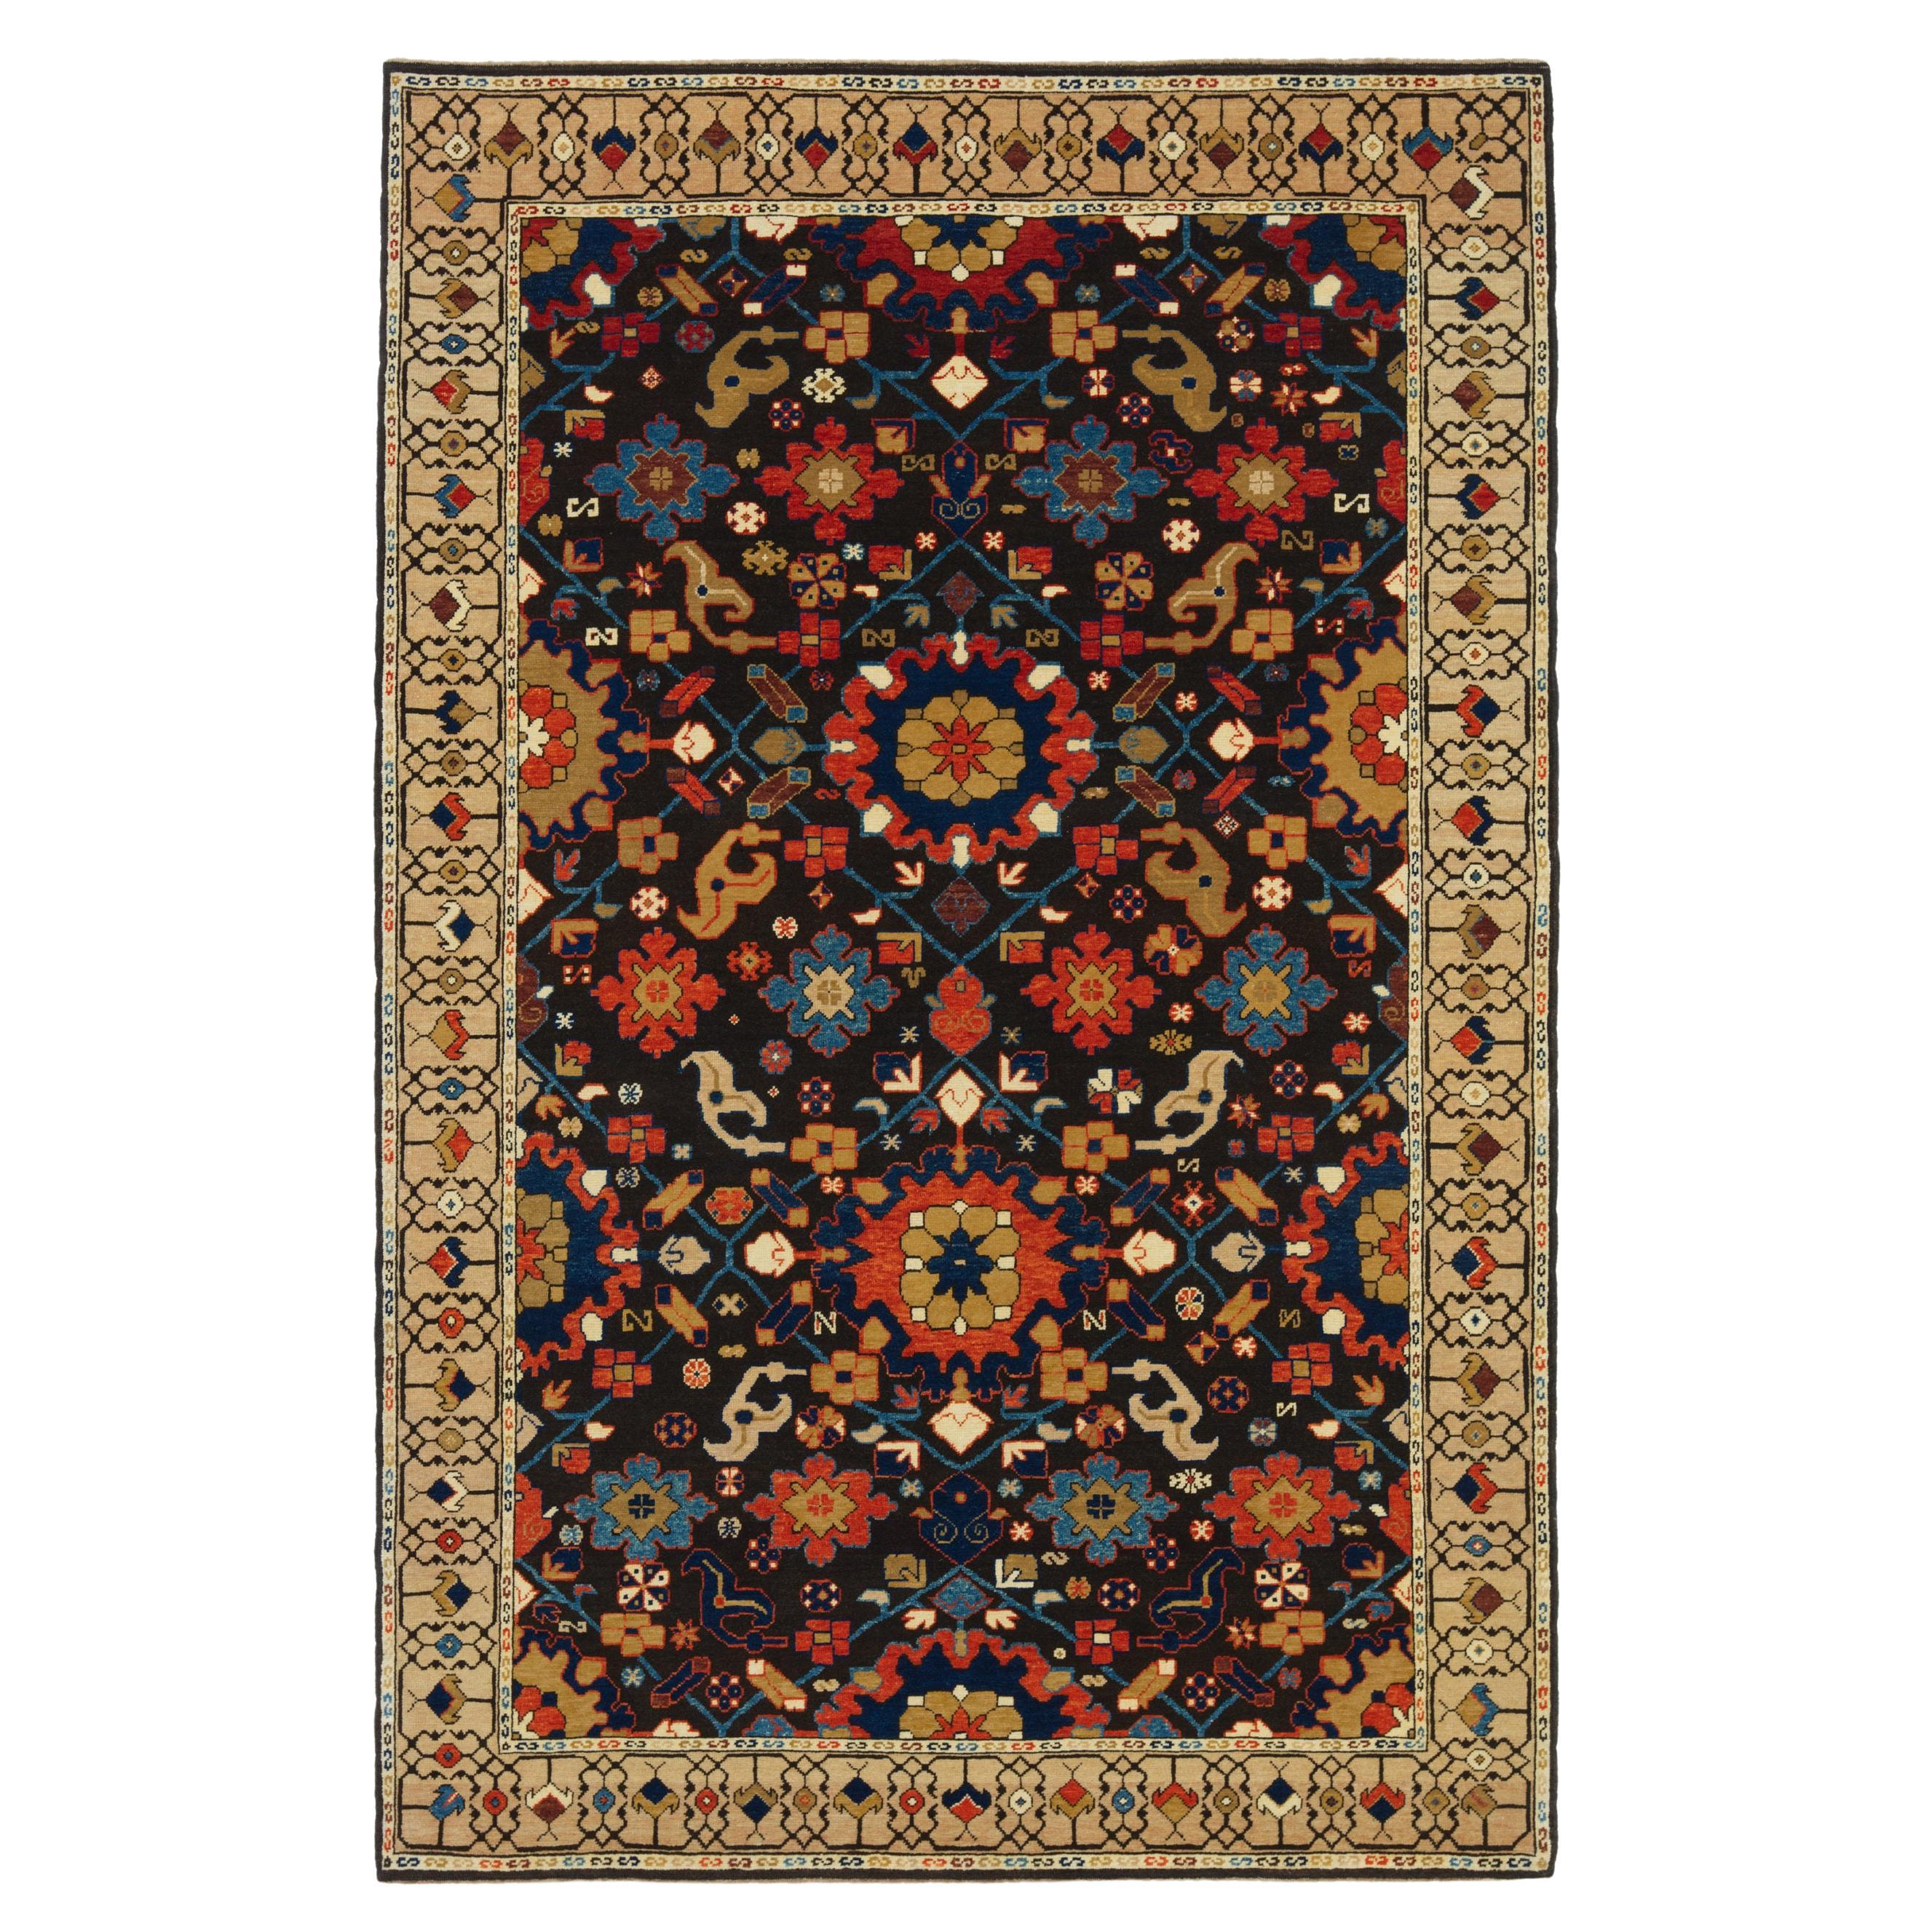 Ararat Rugs Palmettes and Flowers Lattice Rug Antique Revival Carpet Natural Dye For Sale